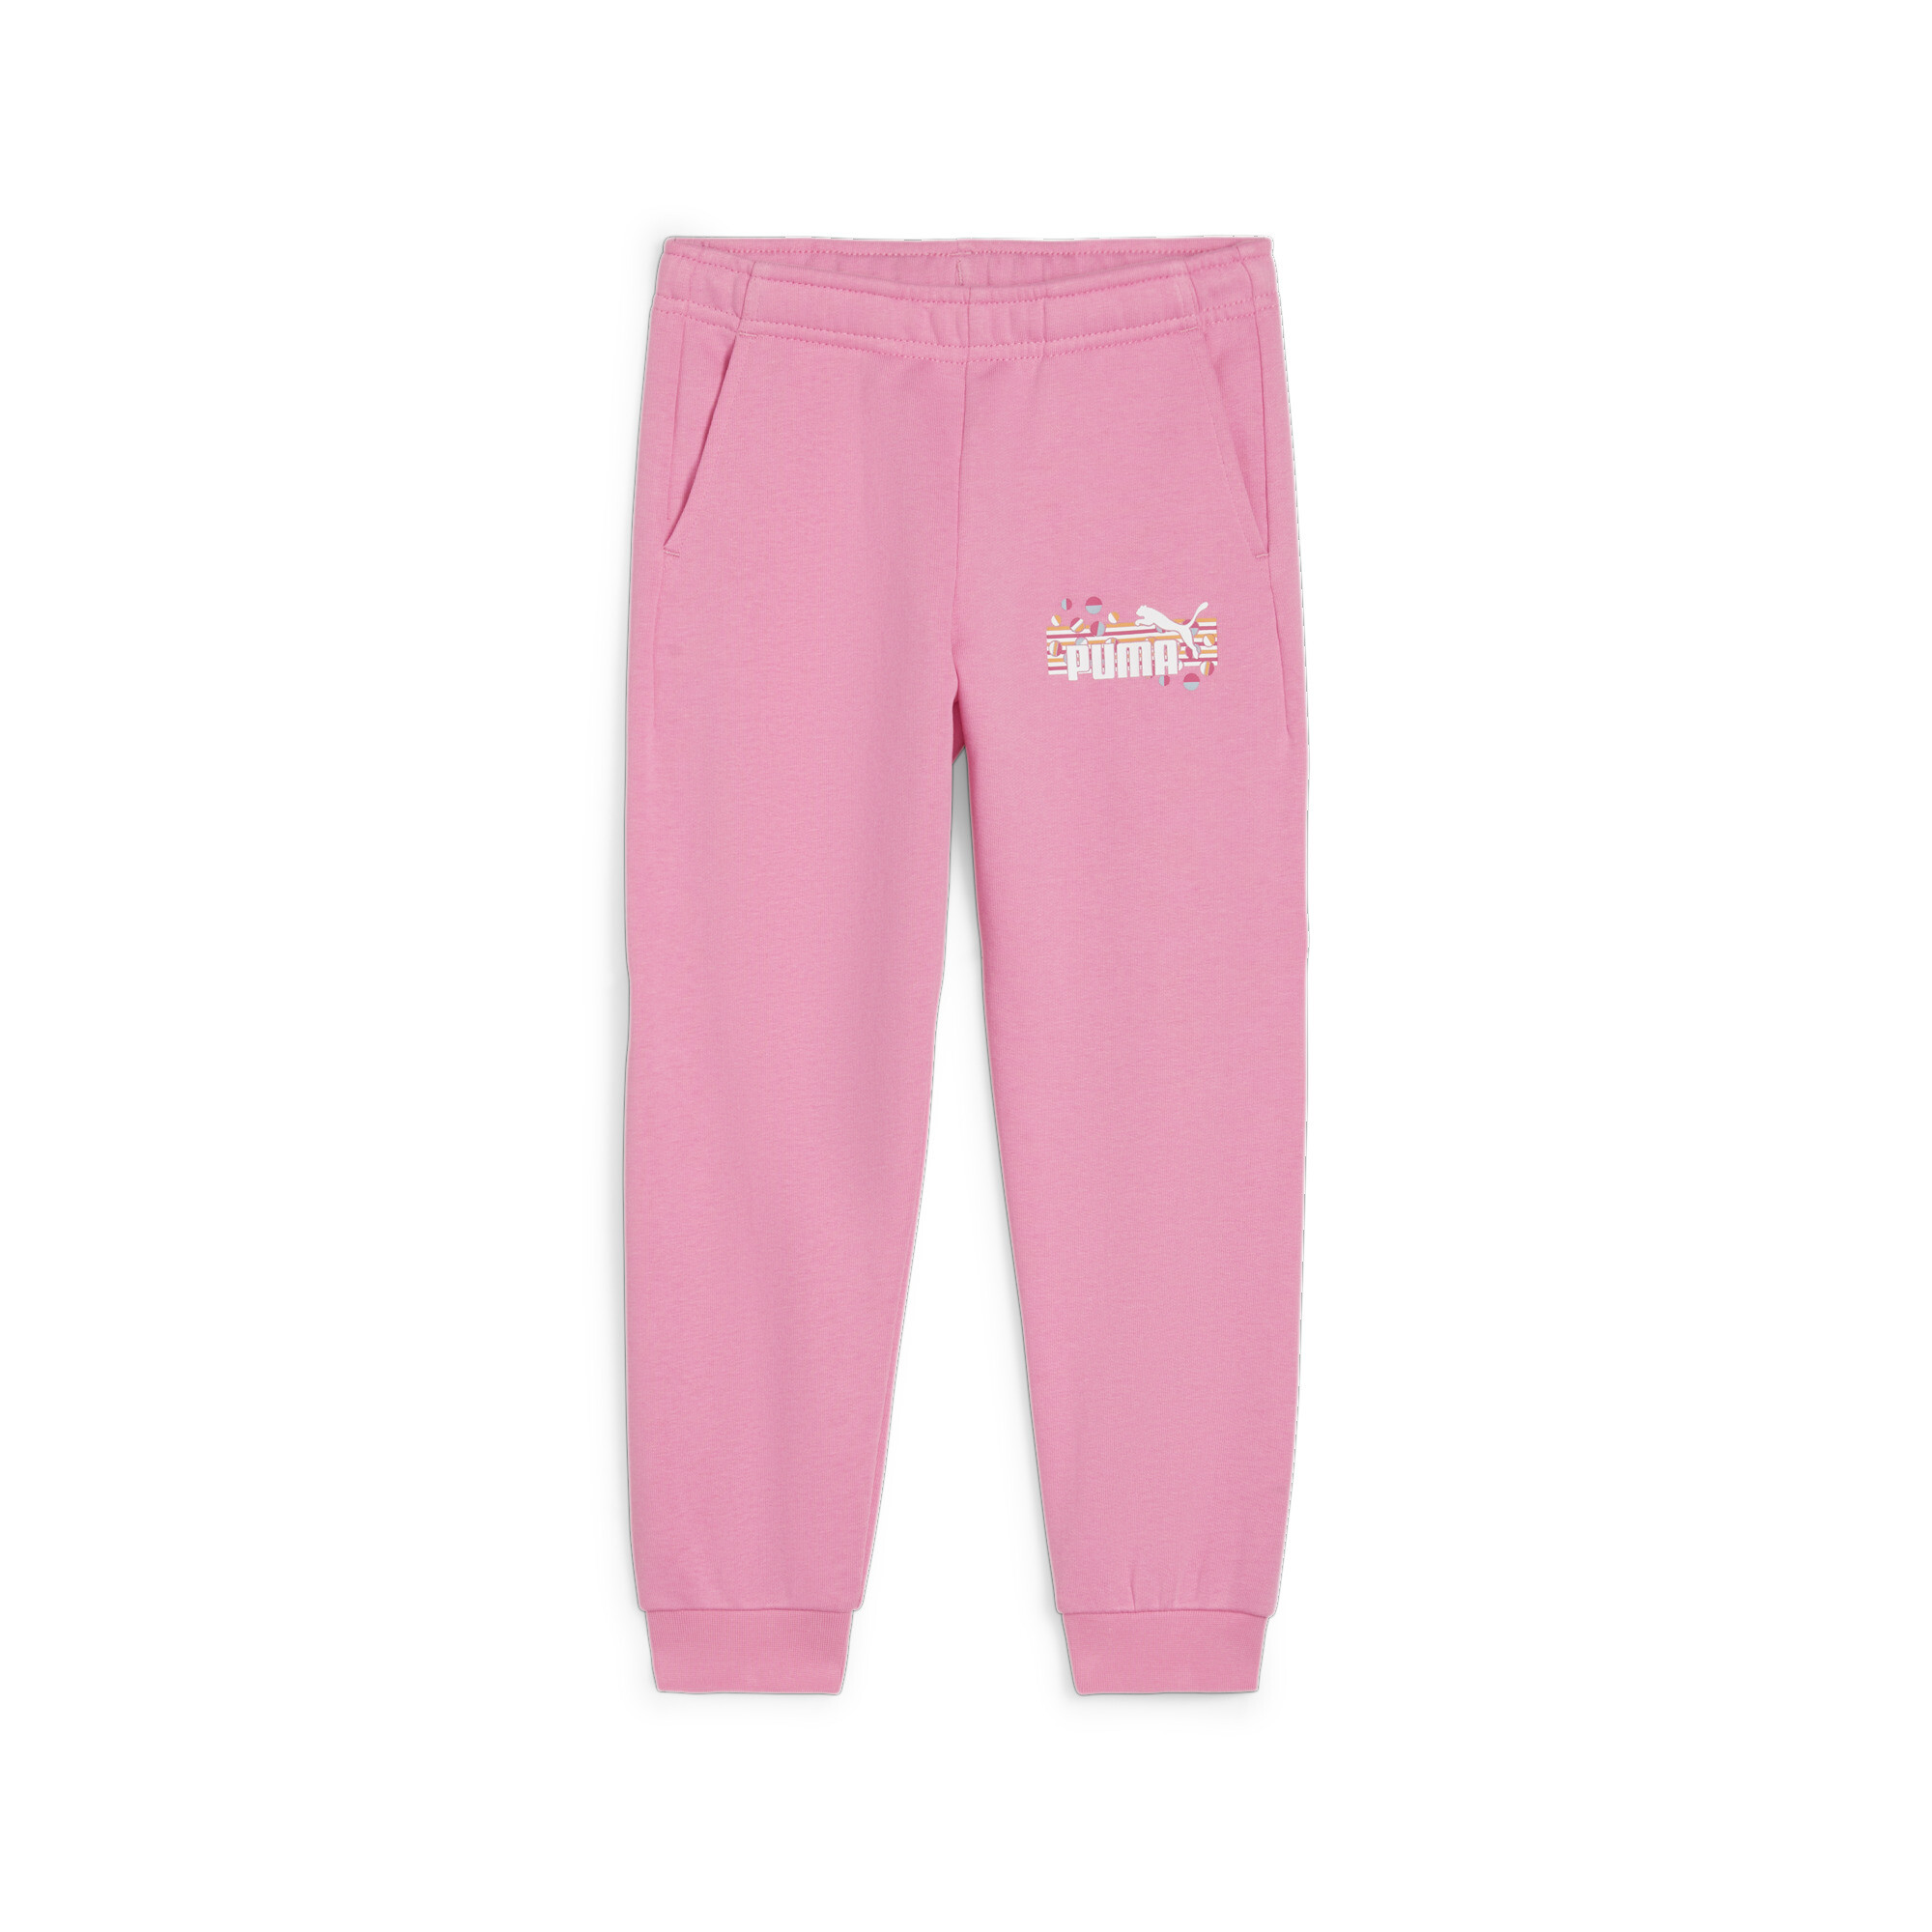 Puma ESS+ SUMMER CAMP Kids' Sweatpants, Pink, Size 4-5Y, Age